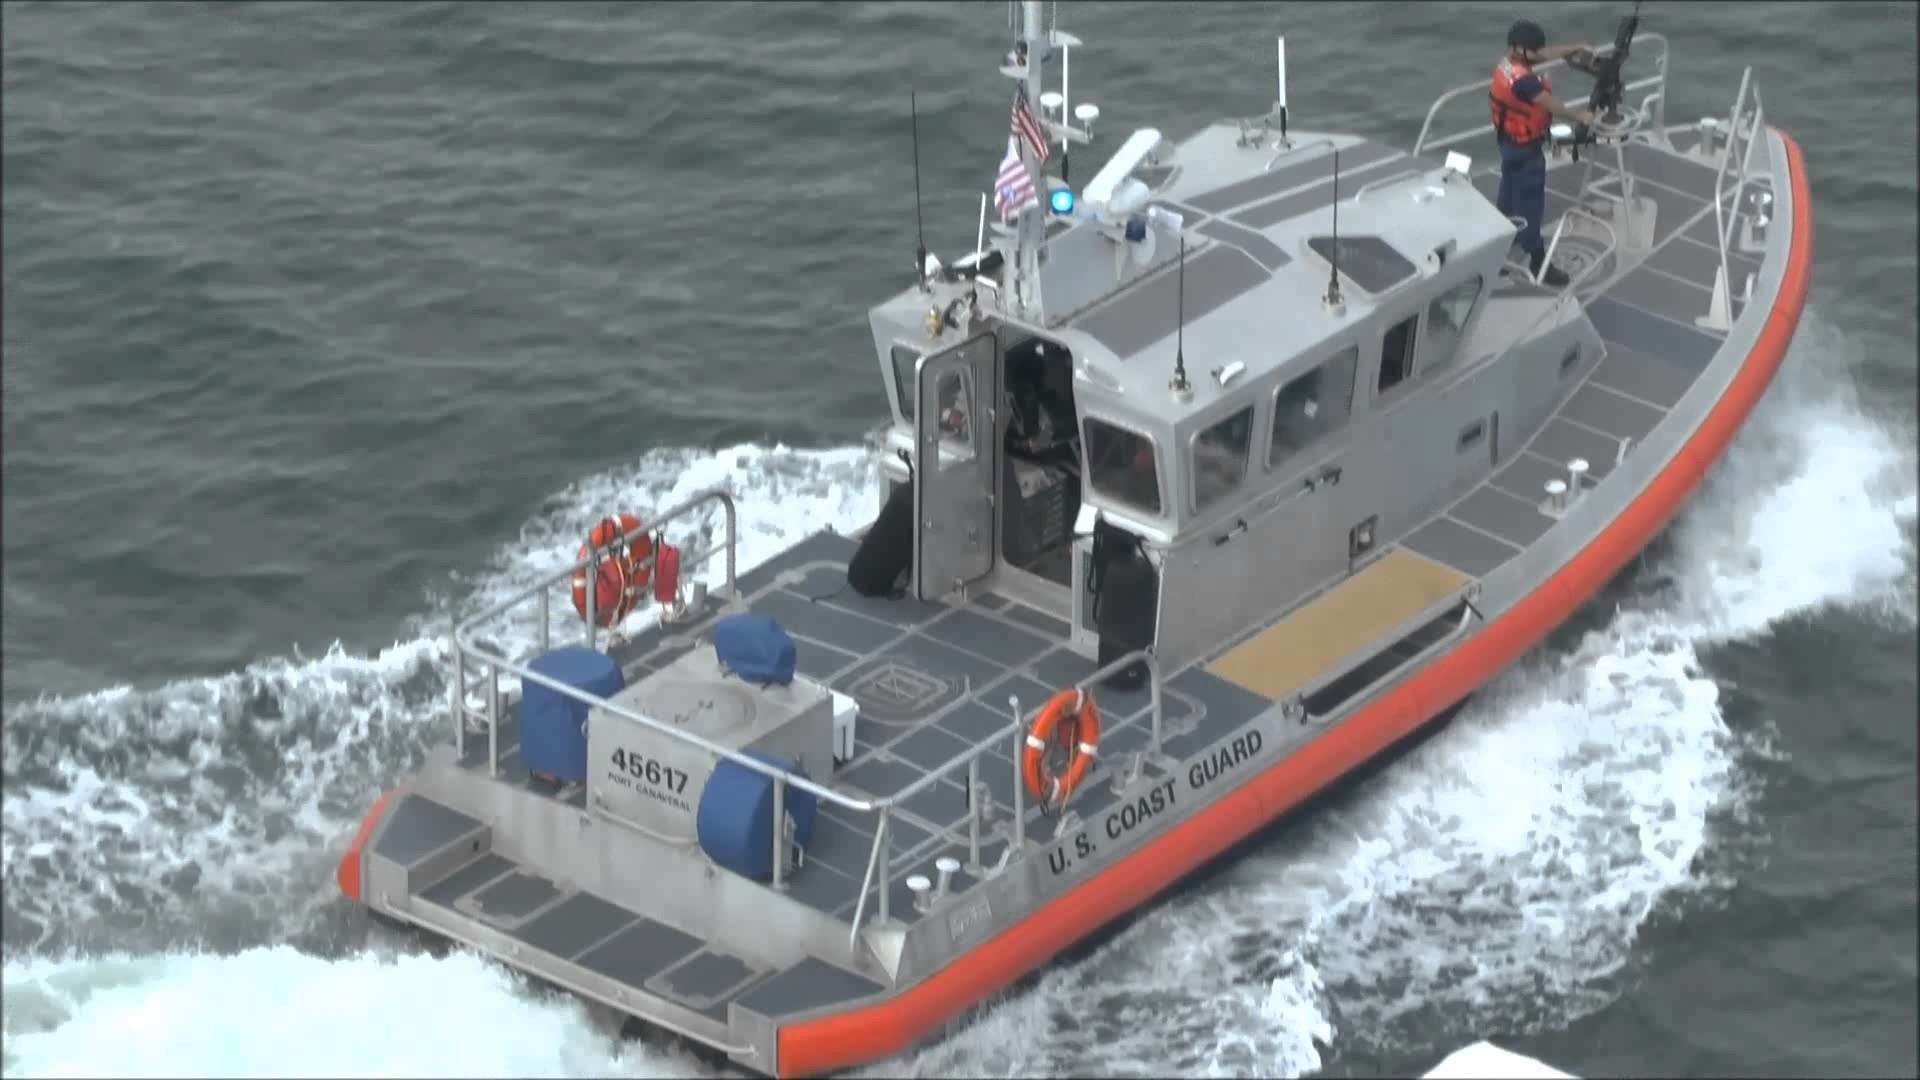 1920x1080 US Coast Guard patrol boat in action